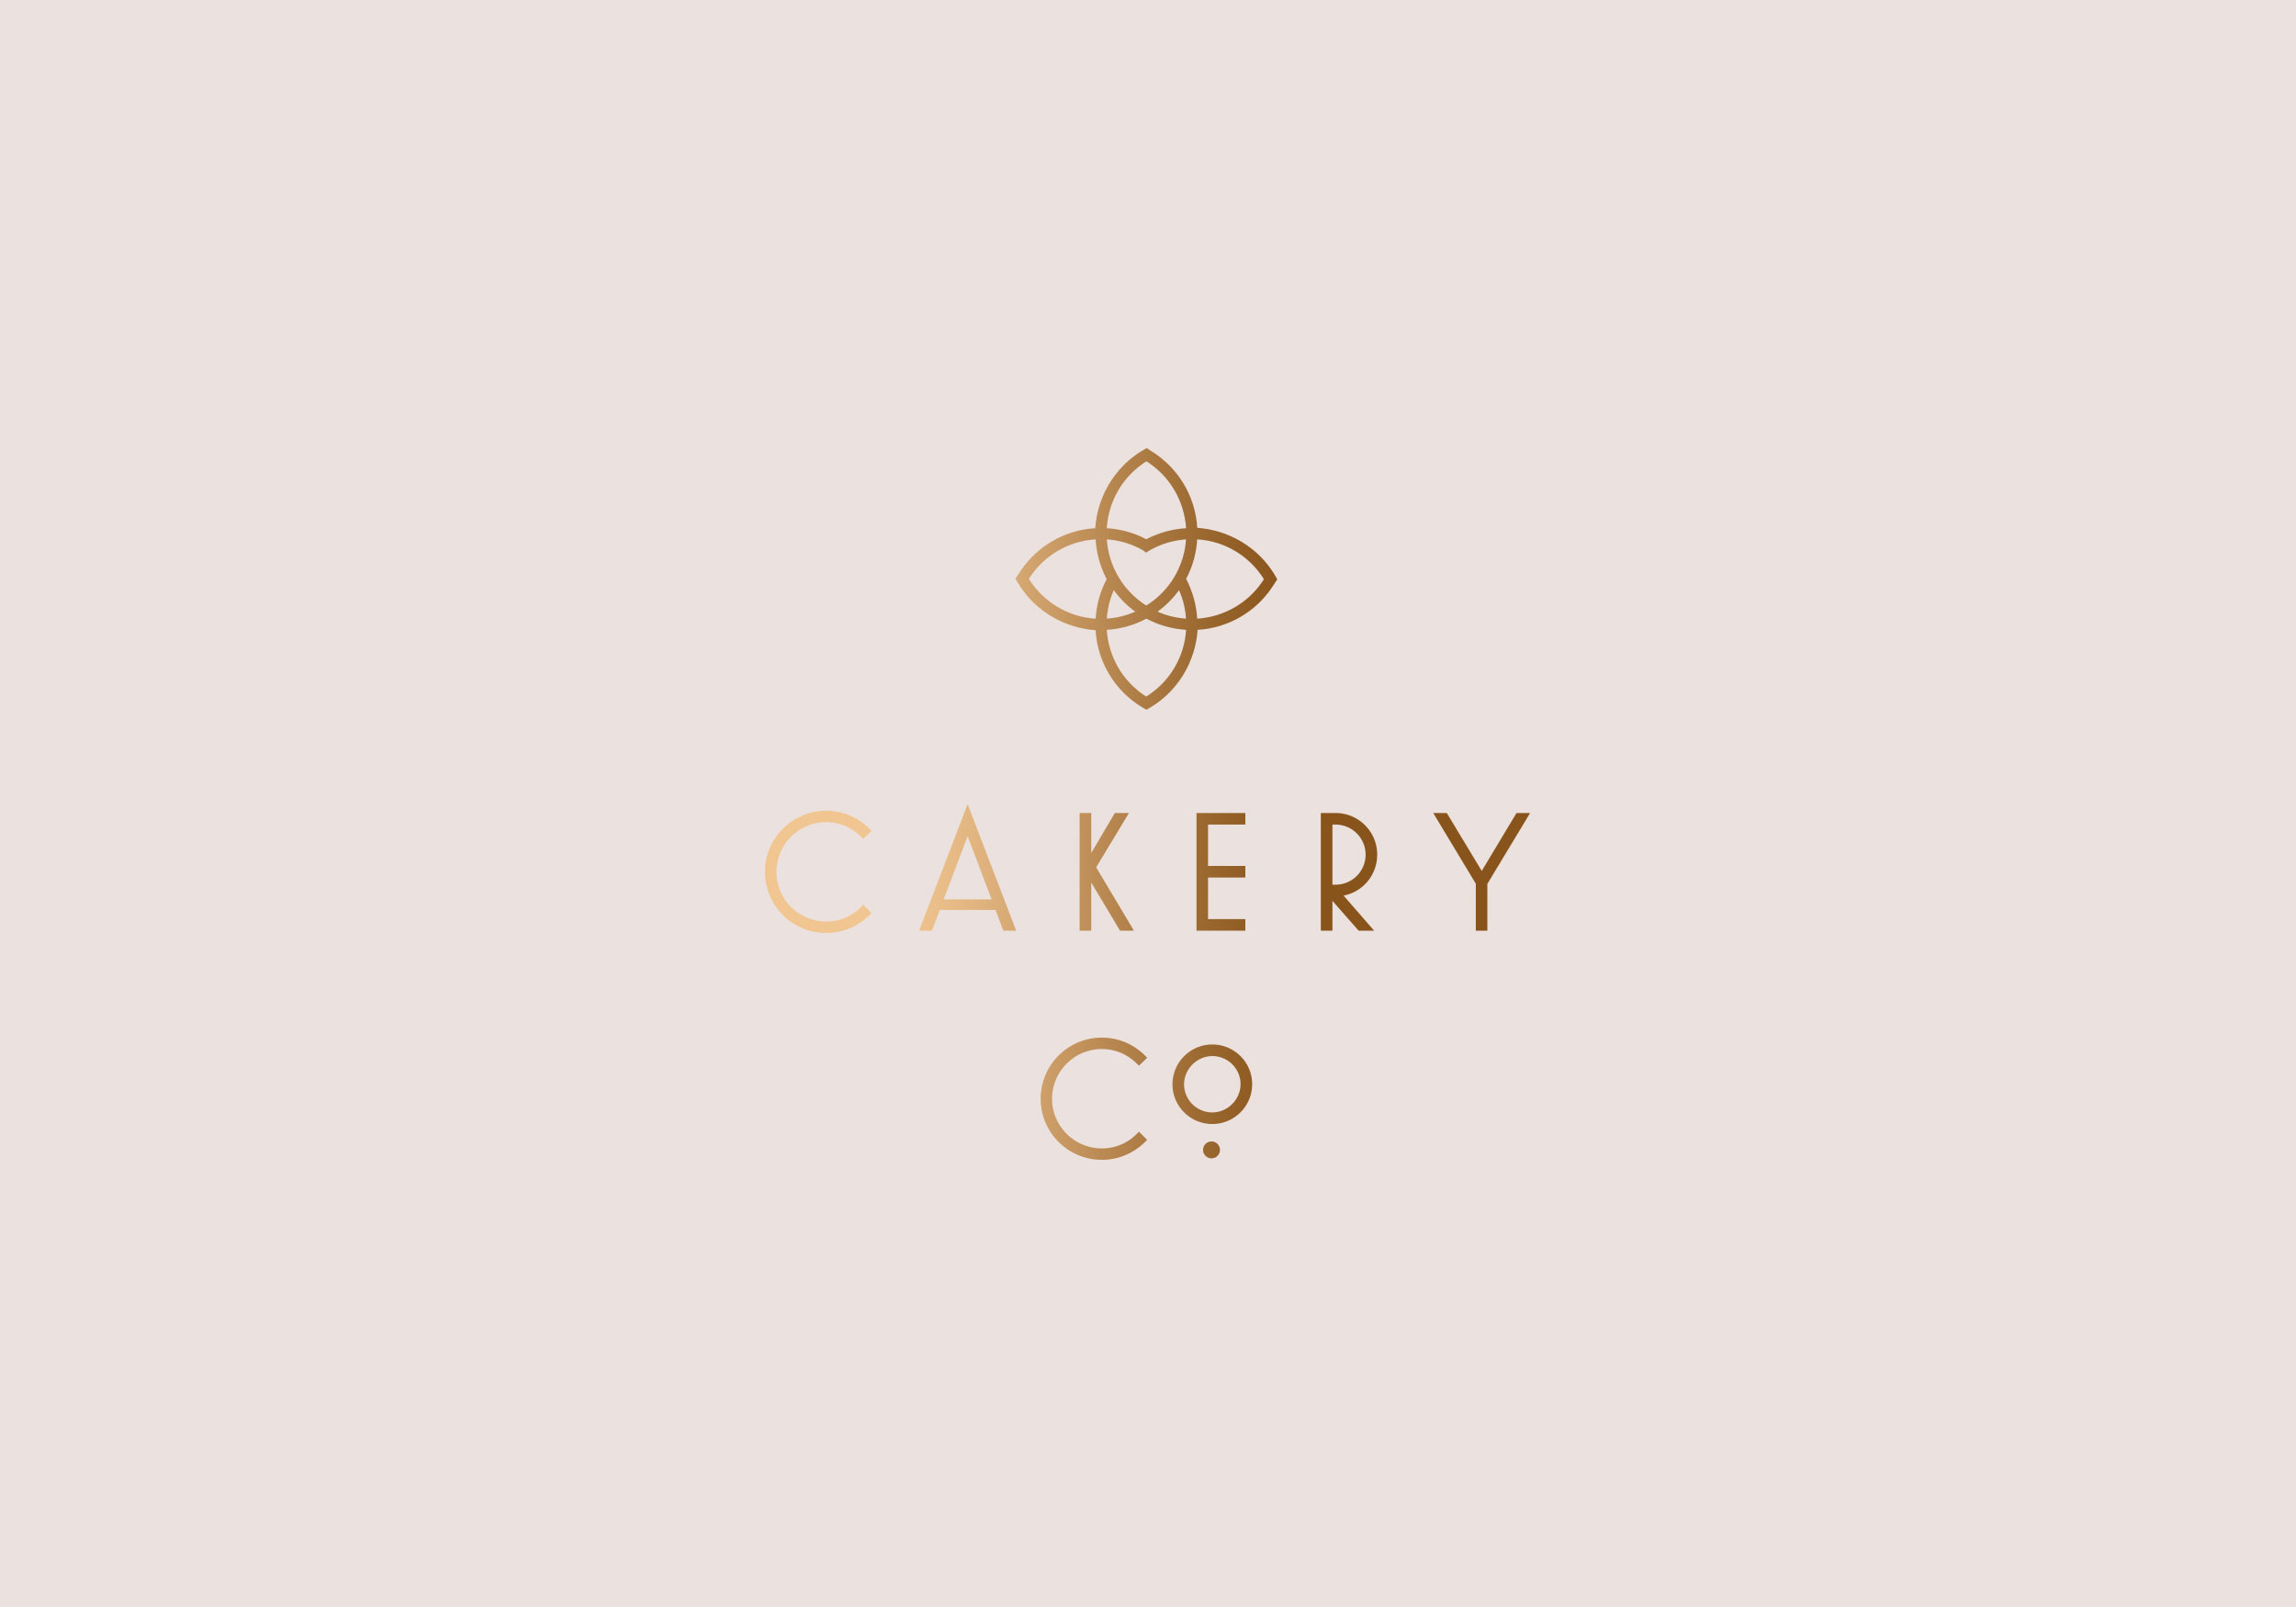 Cakery Co